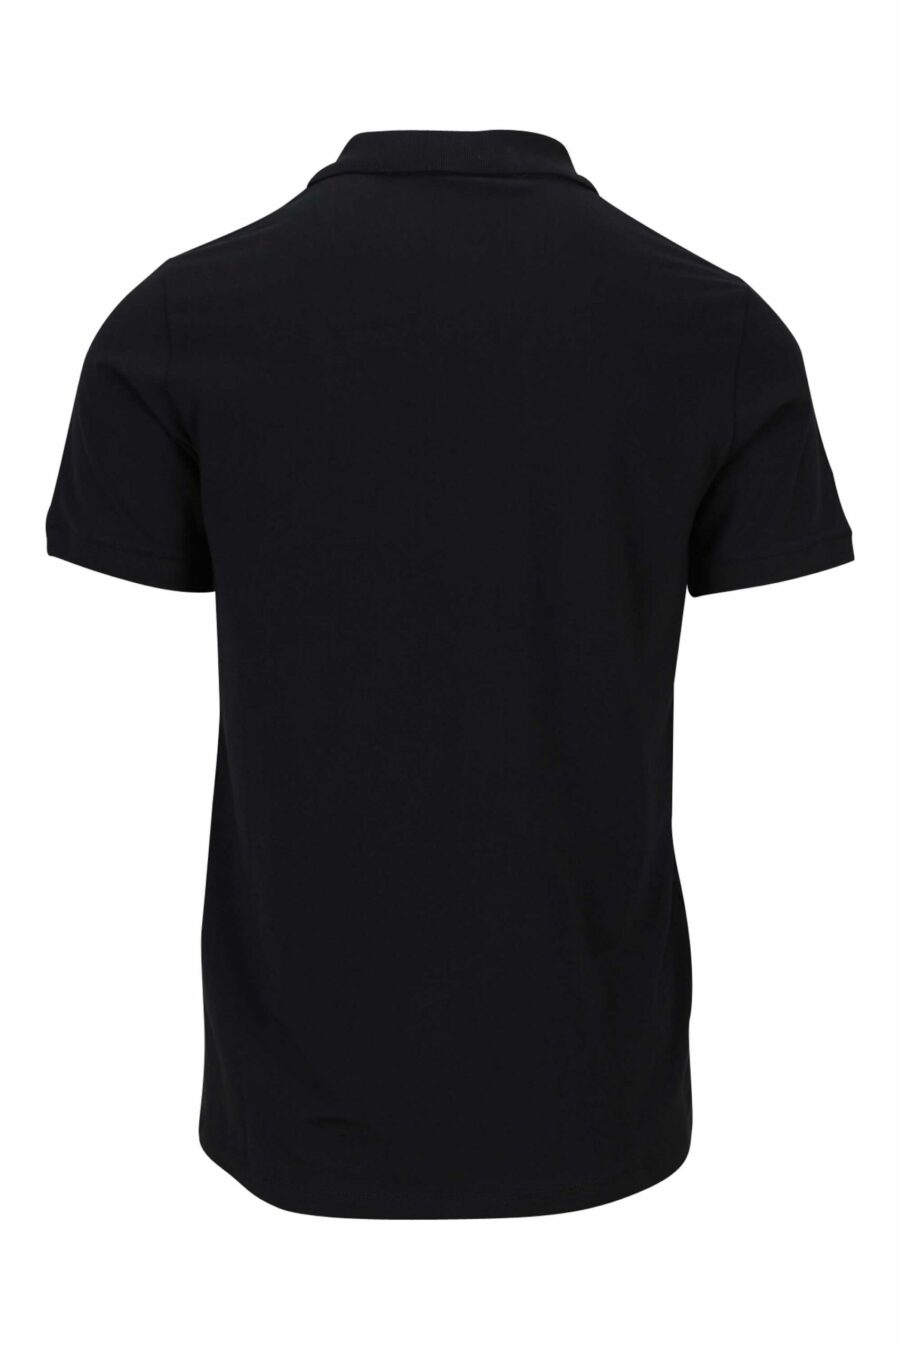 Black polo shirt with black glossy logo - 4062226664301 1 1 scaled